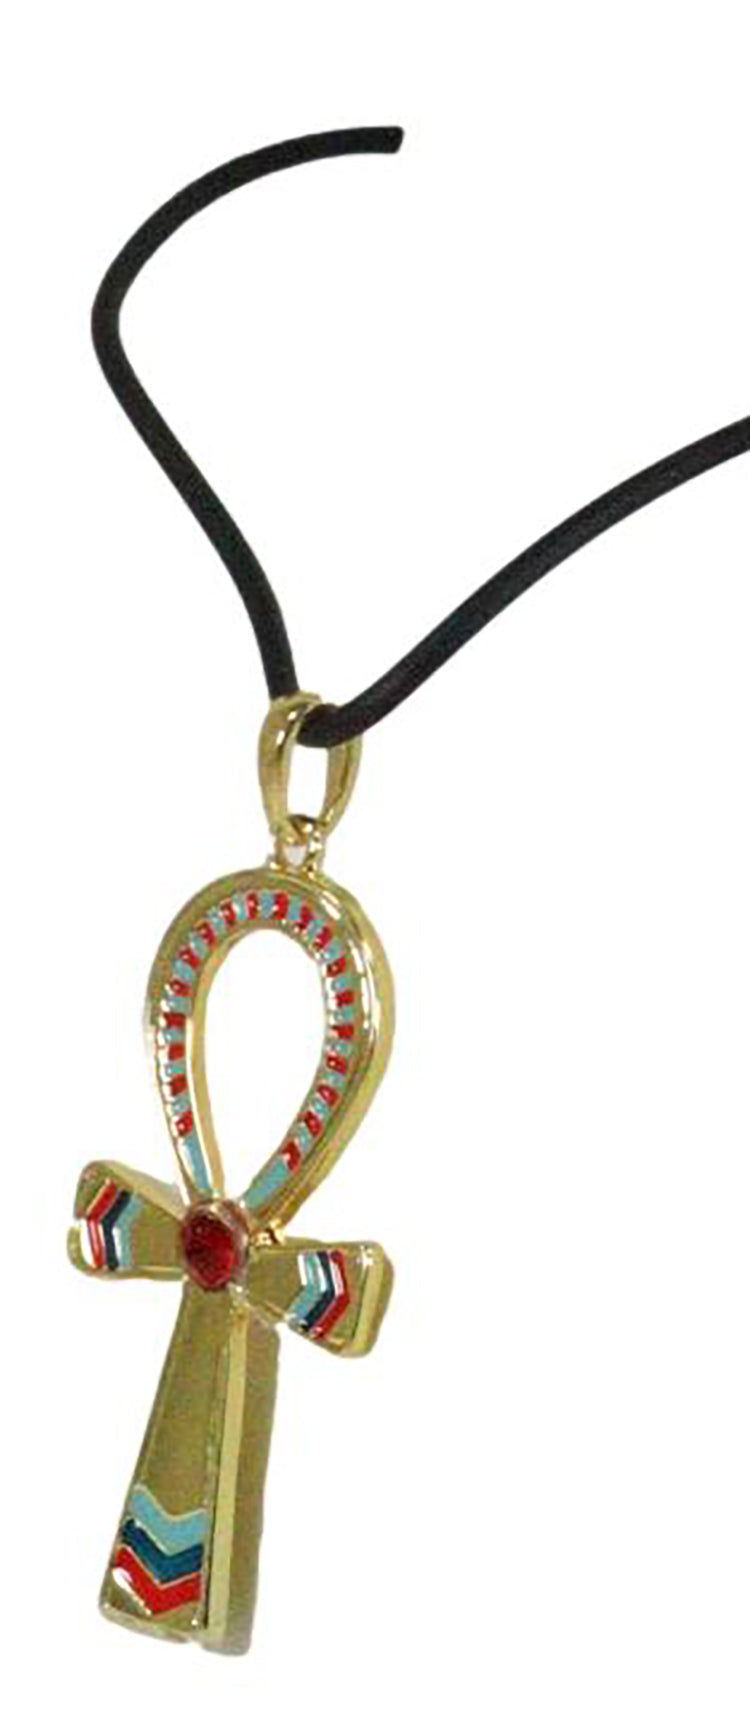 Egyptian Solar Ra Ankh Key Pendant Medallion Pewter Necklace Accessory Jewelry